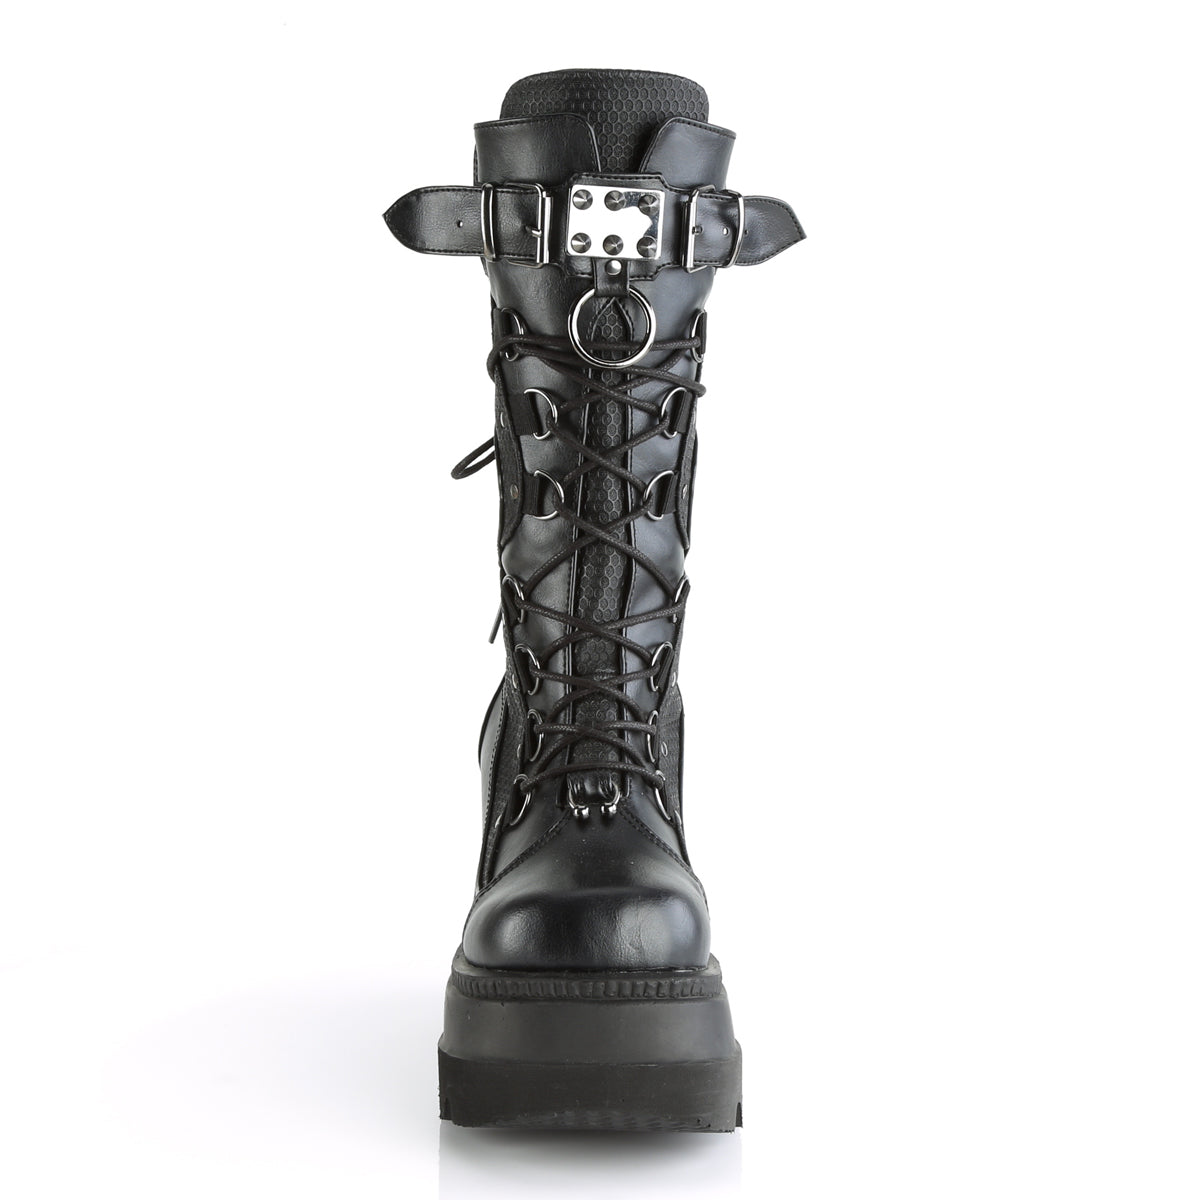 SHAKER-70 Demonia Black Vegan Leather Women's Mid-Calf & Knee High Boots [Demonia Cult Alternative Footwear]